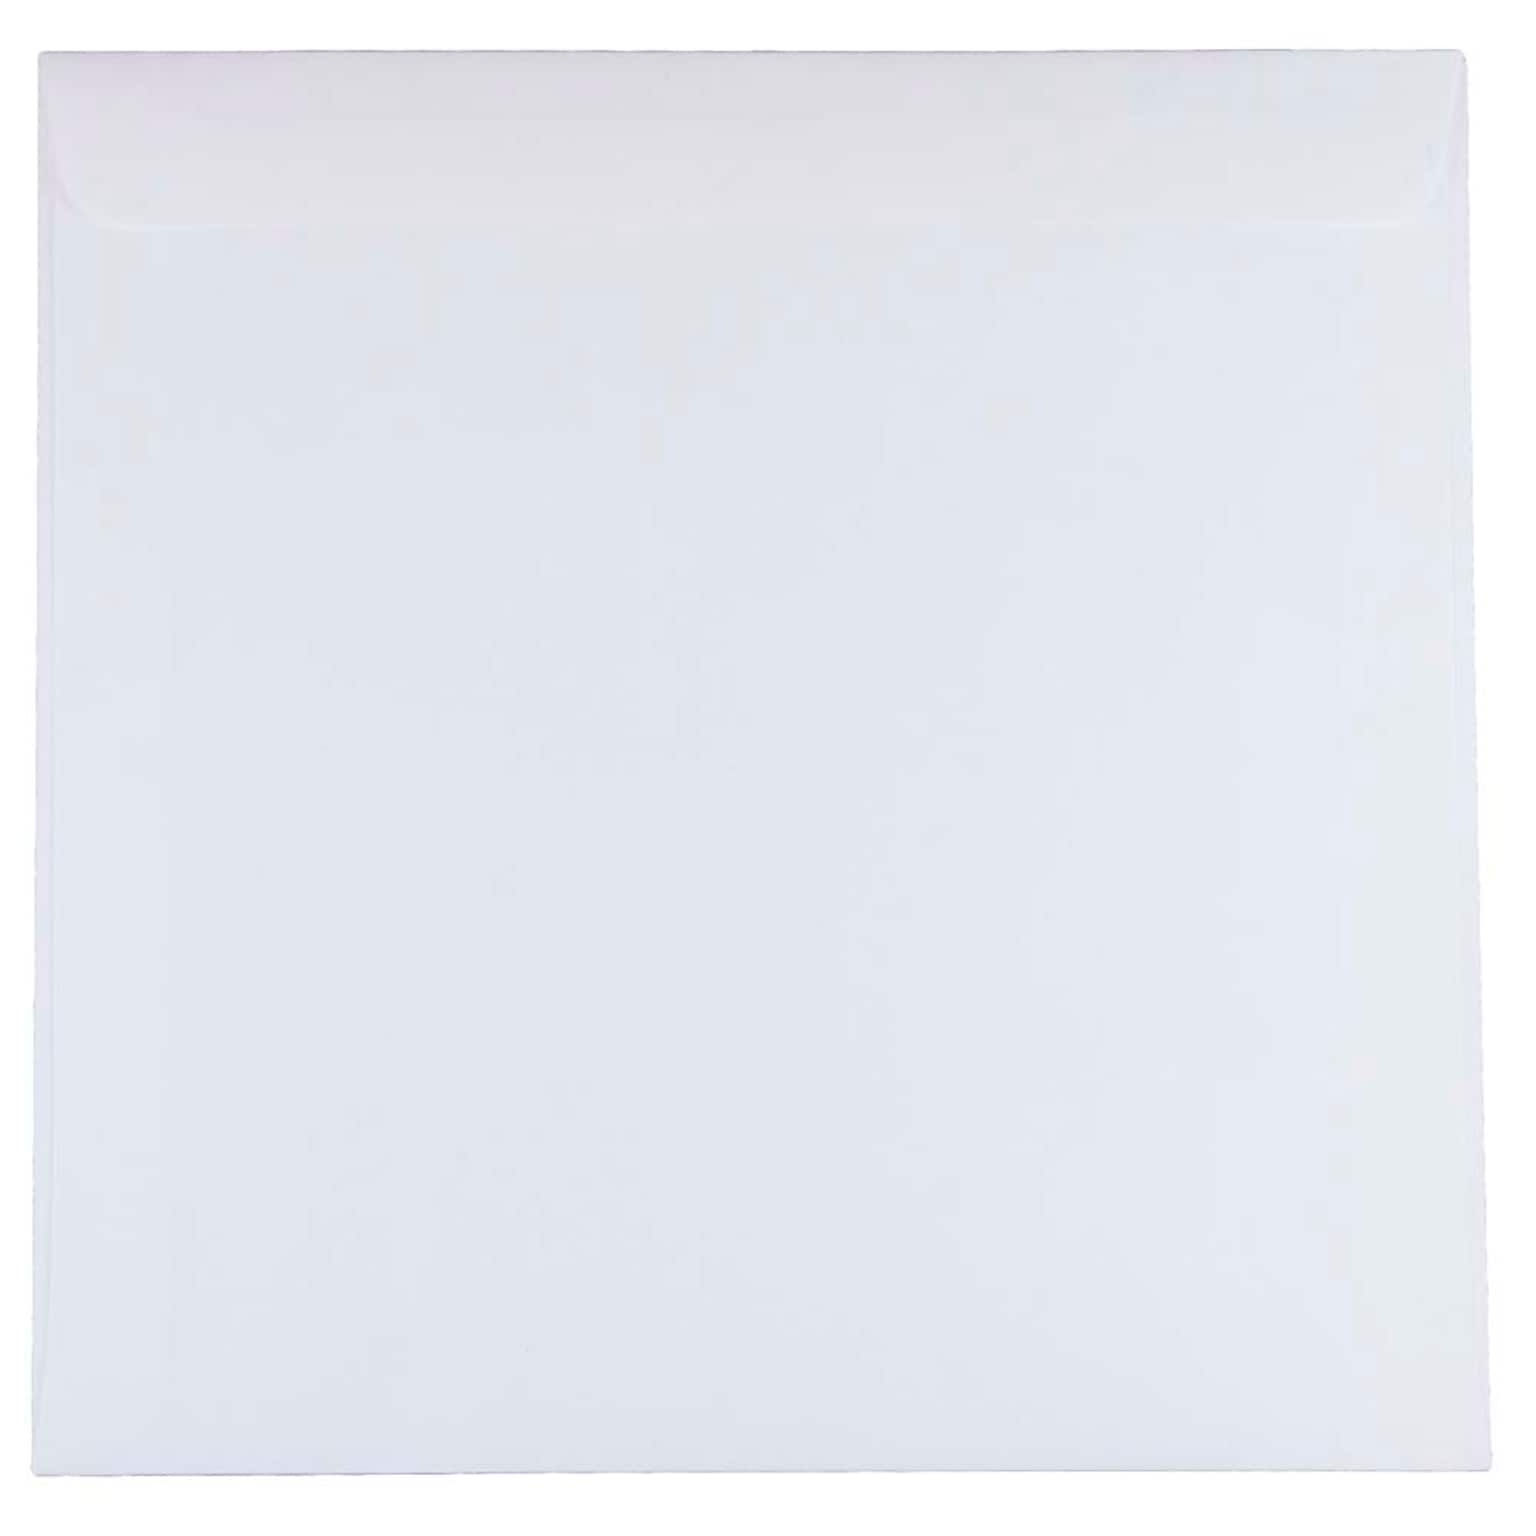 JAM Paper 9.5 x 9.5 Square Invitation Envelopes, White, 100/Pack (4233B)